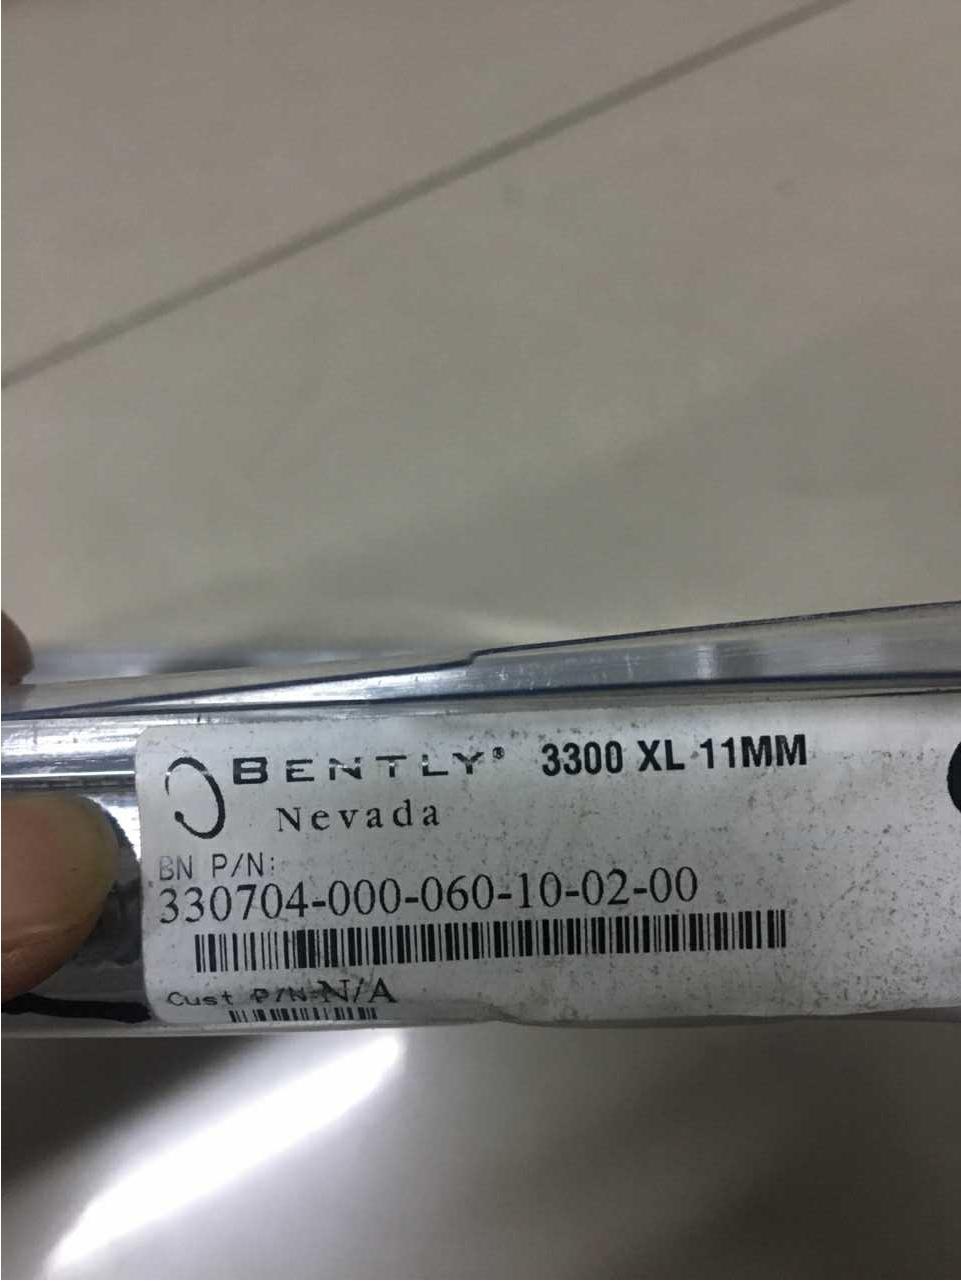 BENTLY330704-000-060-10-02-00   3300XL   11mm